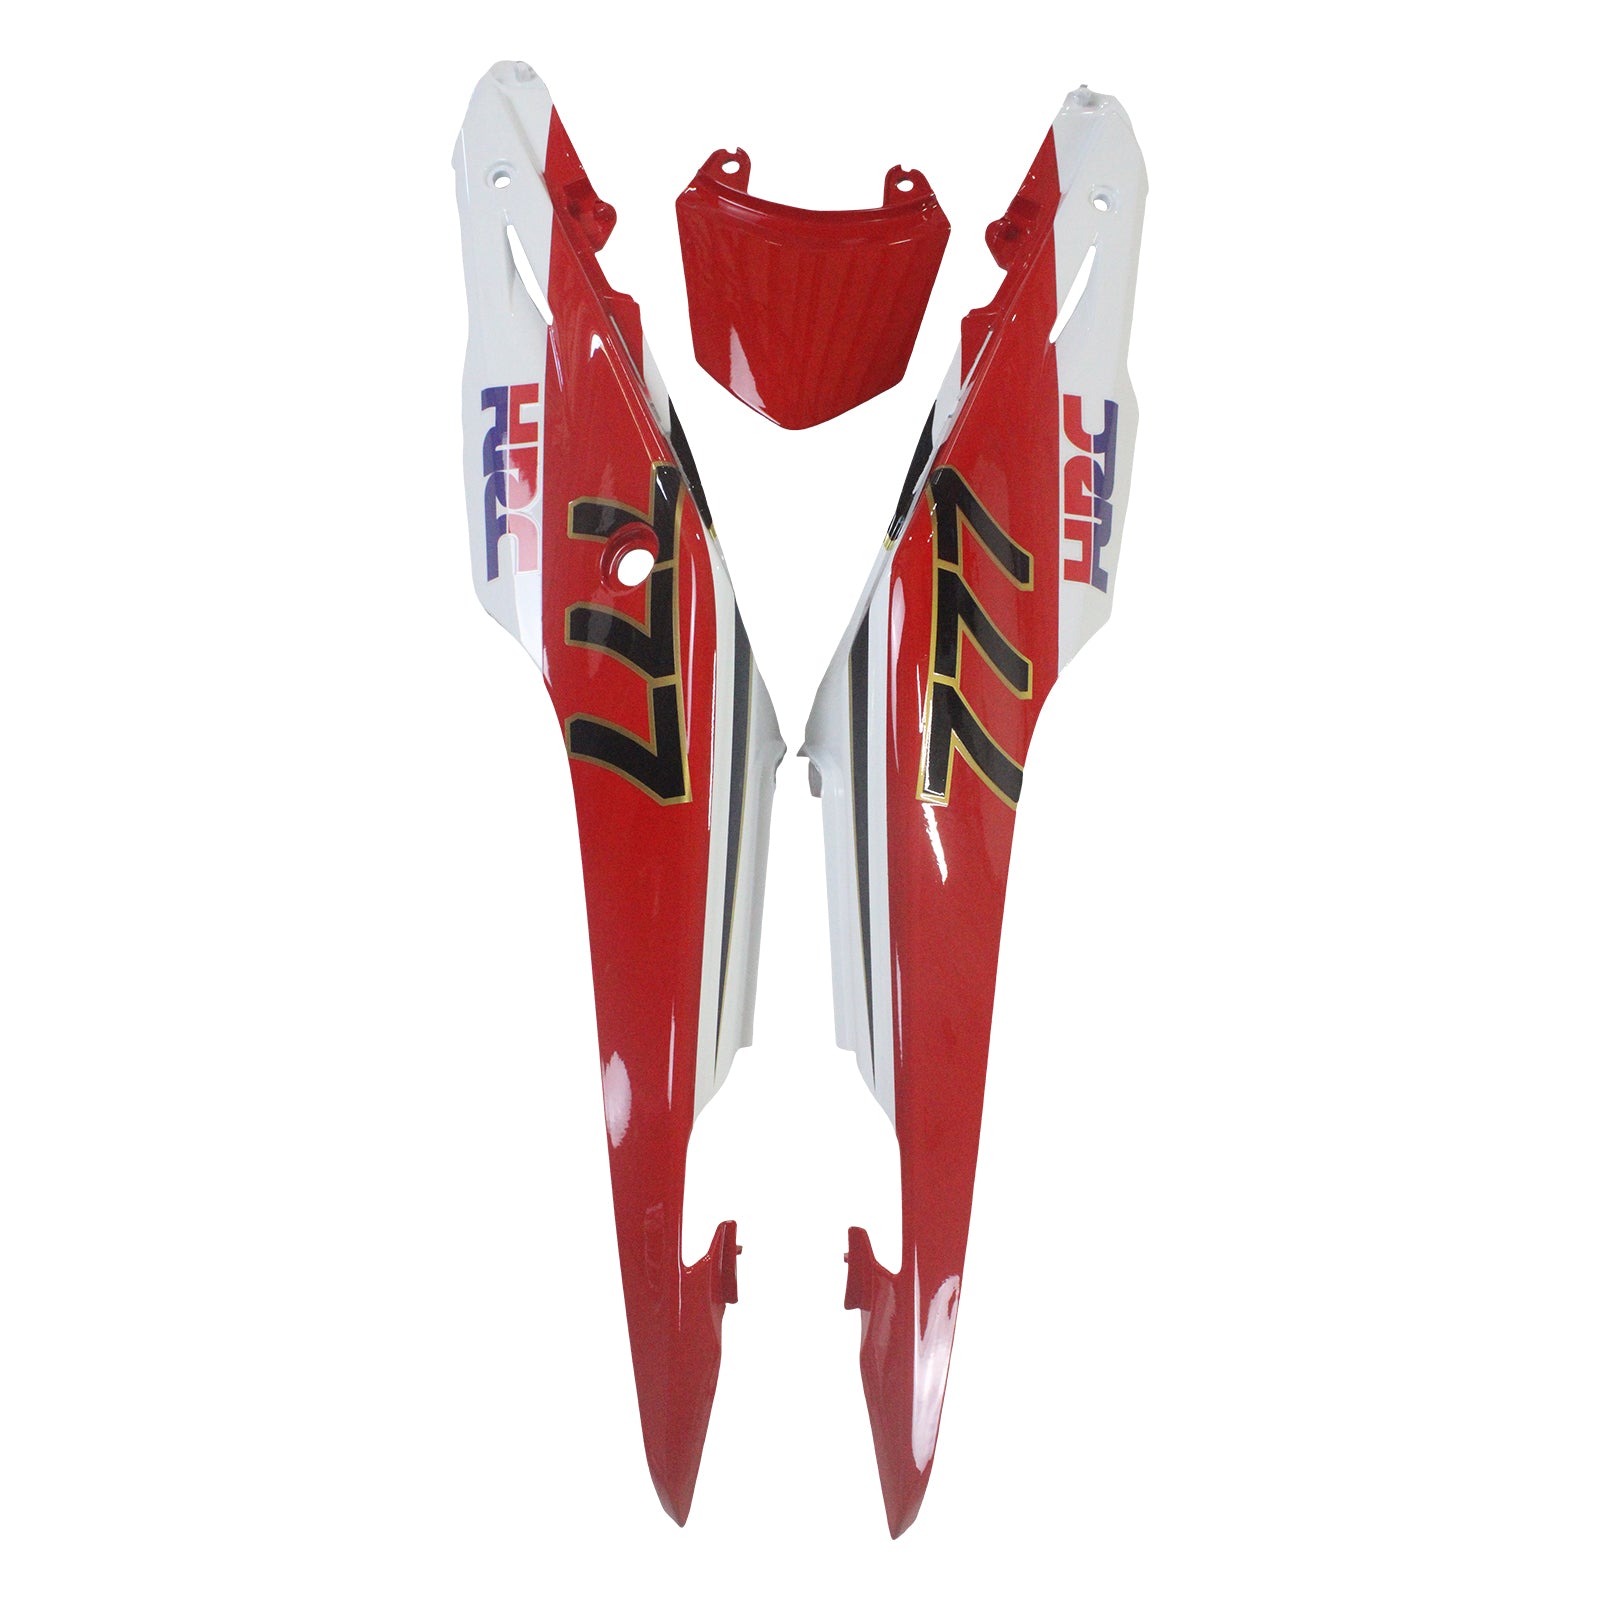 Kit carena Amotopart 2013-2015 CBR500R Honda rosso e bianco